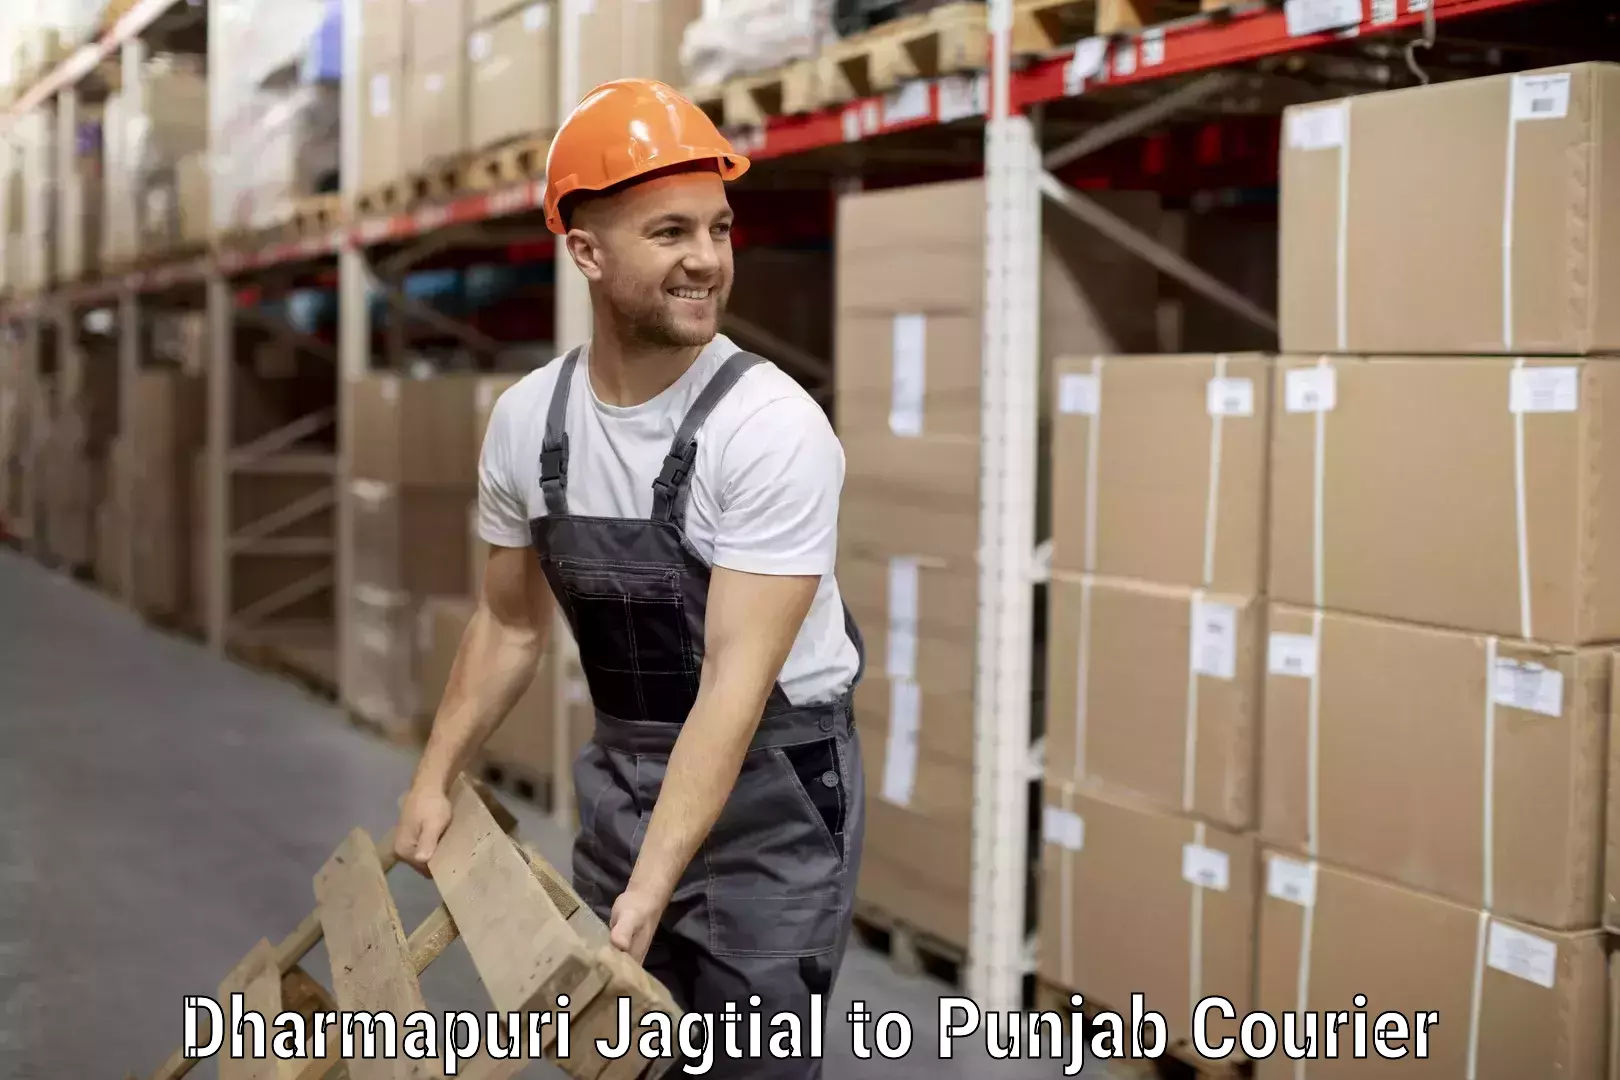 Luggage shipment specialists Dharmapuri Jagtial to Punjab